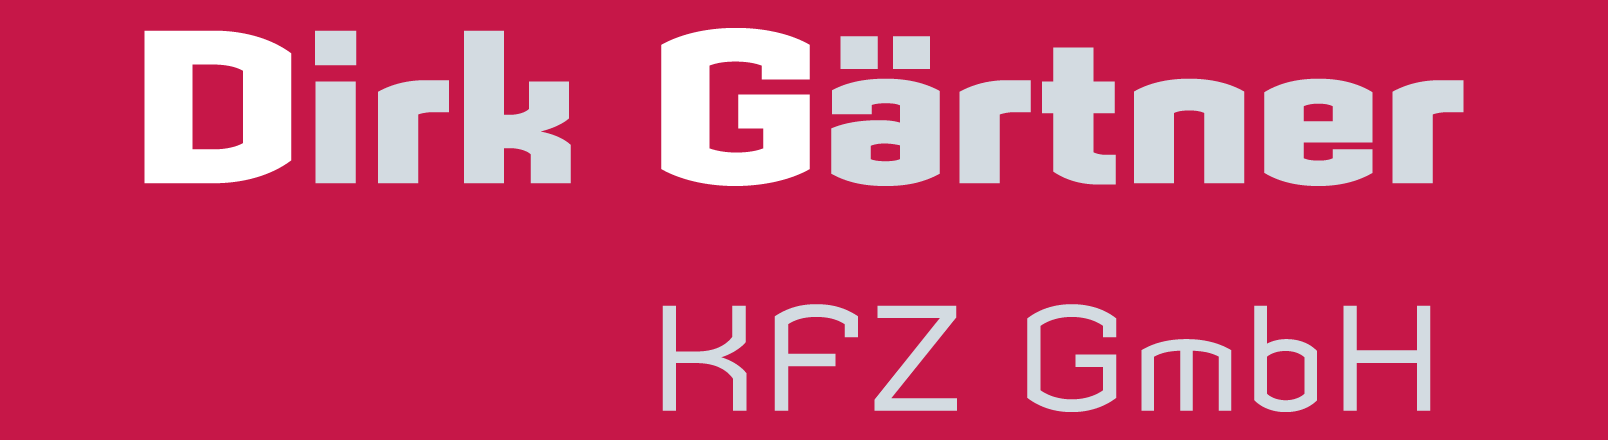 Dirk Gärtner KFZ GmbH